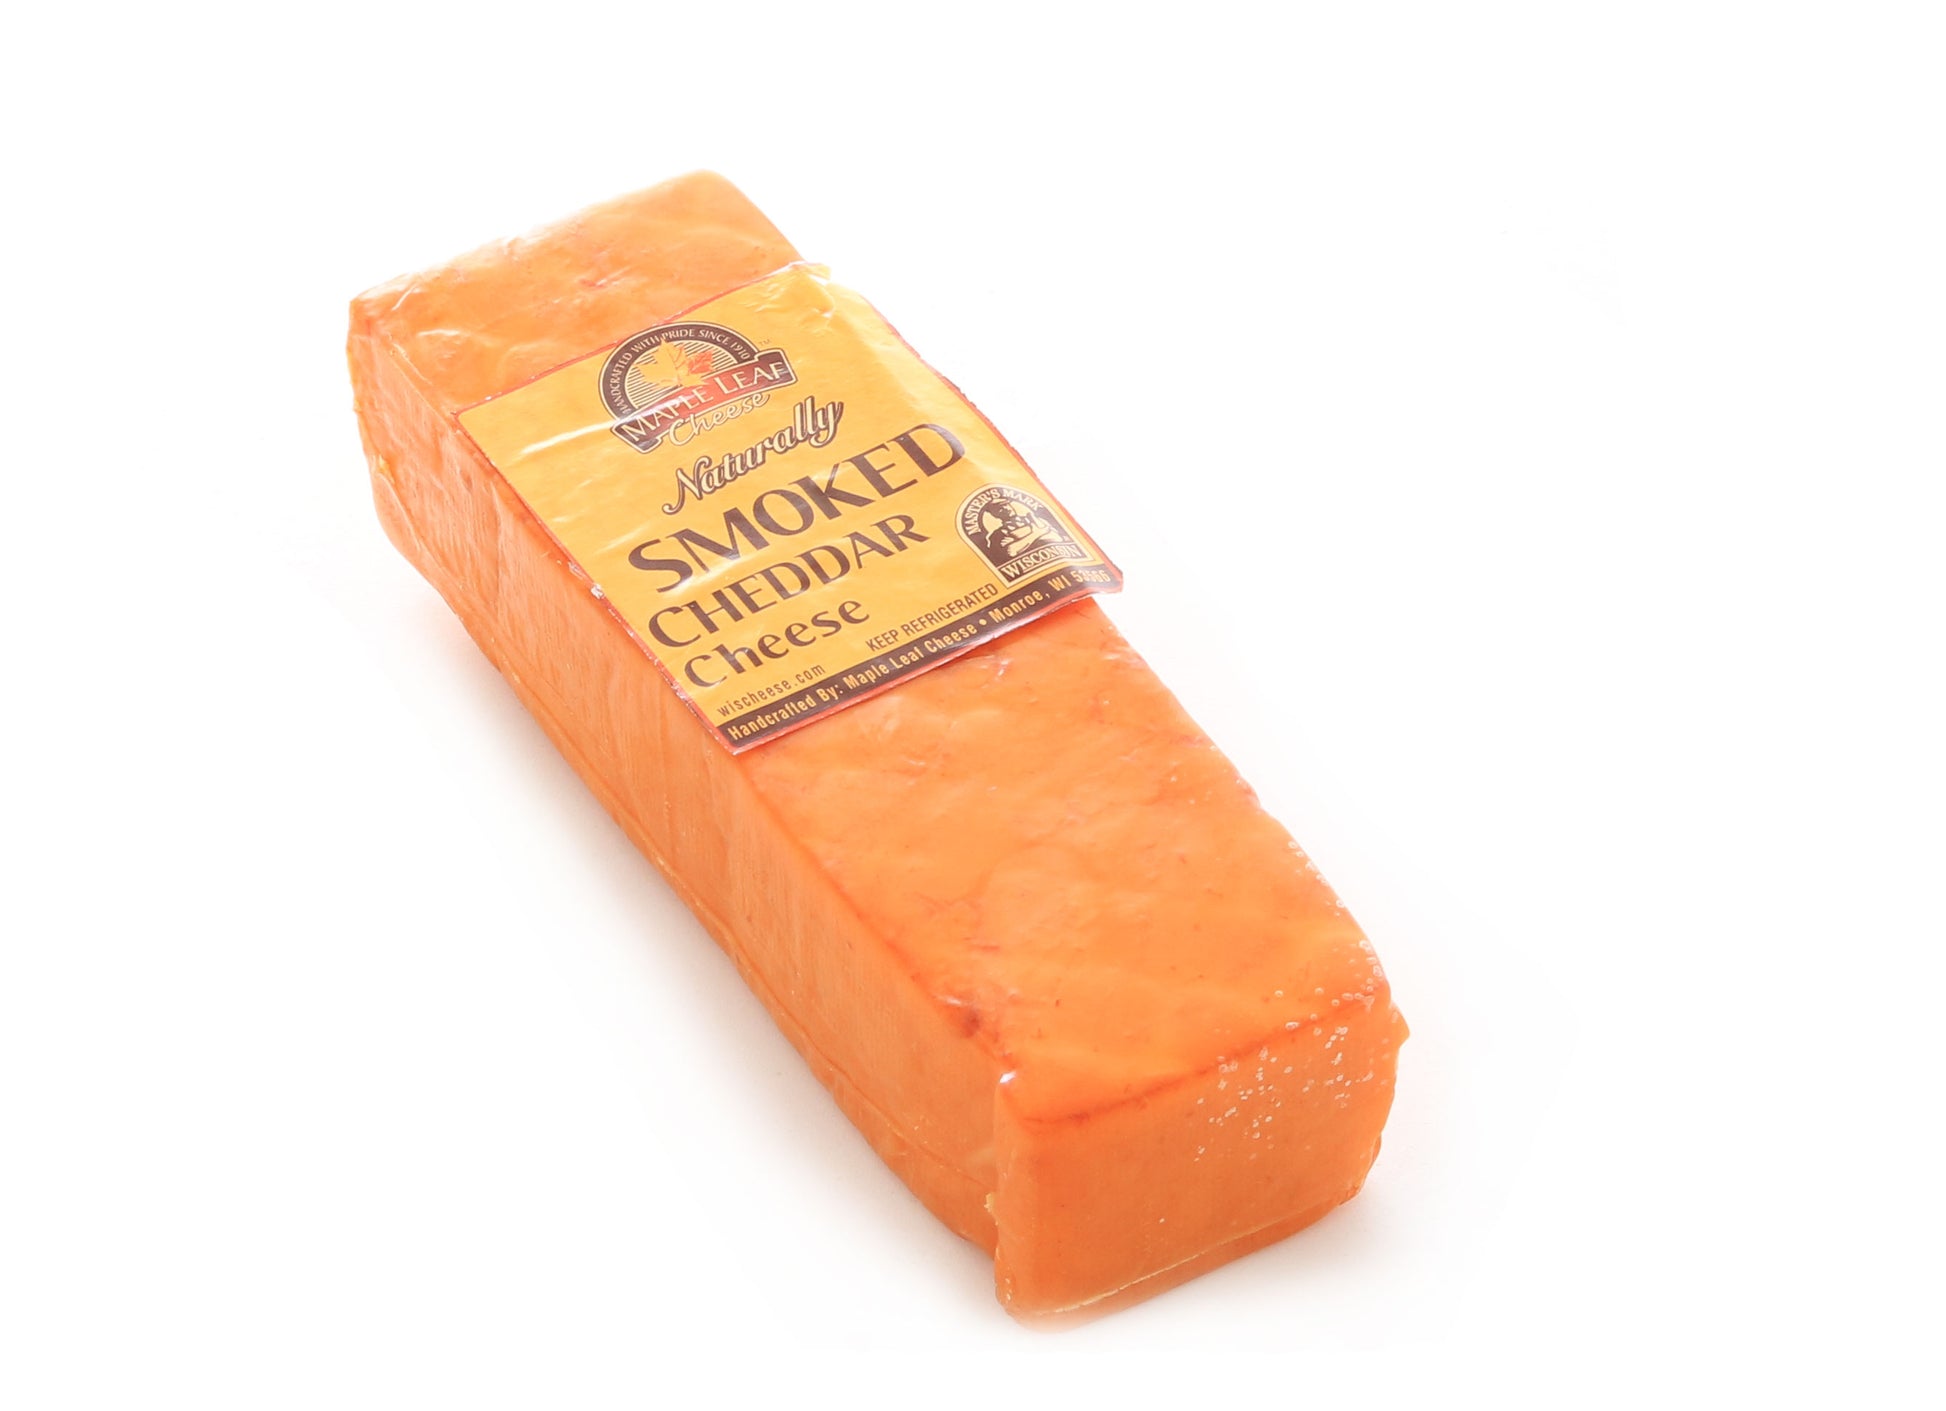 1 pound piece of orange smoked cheddar cheese